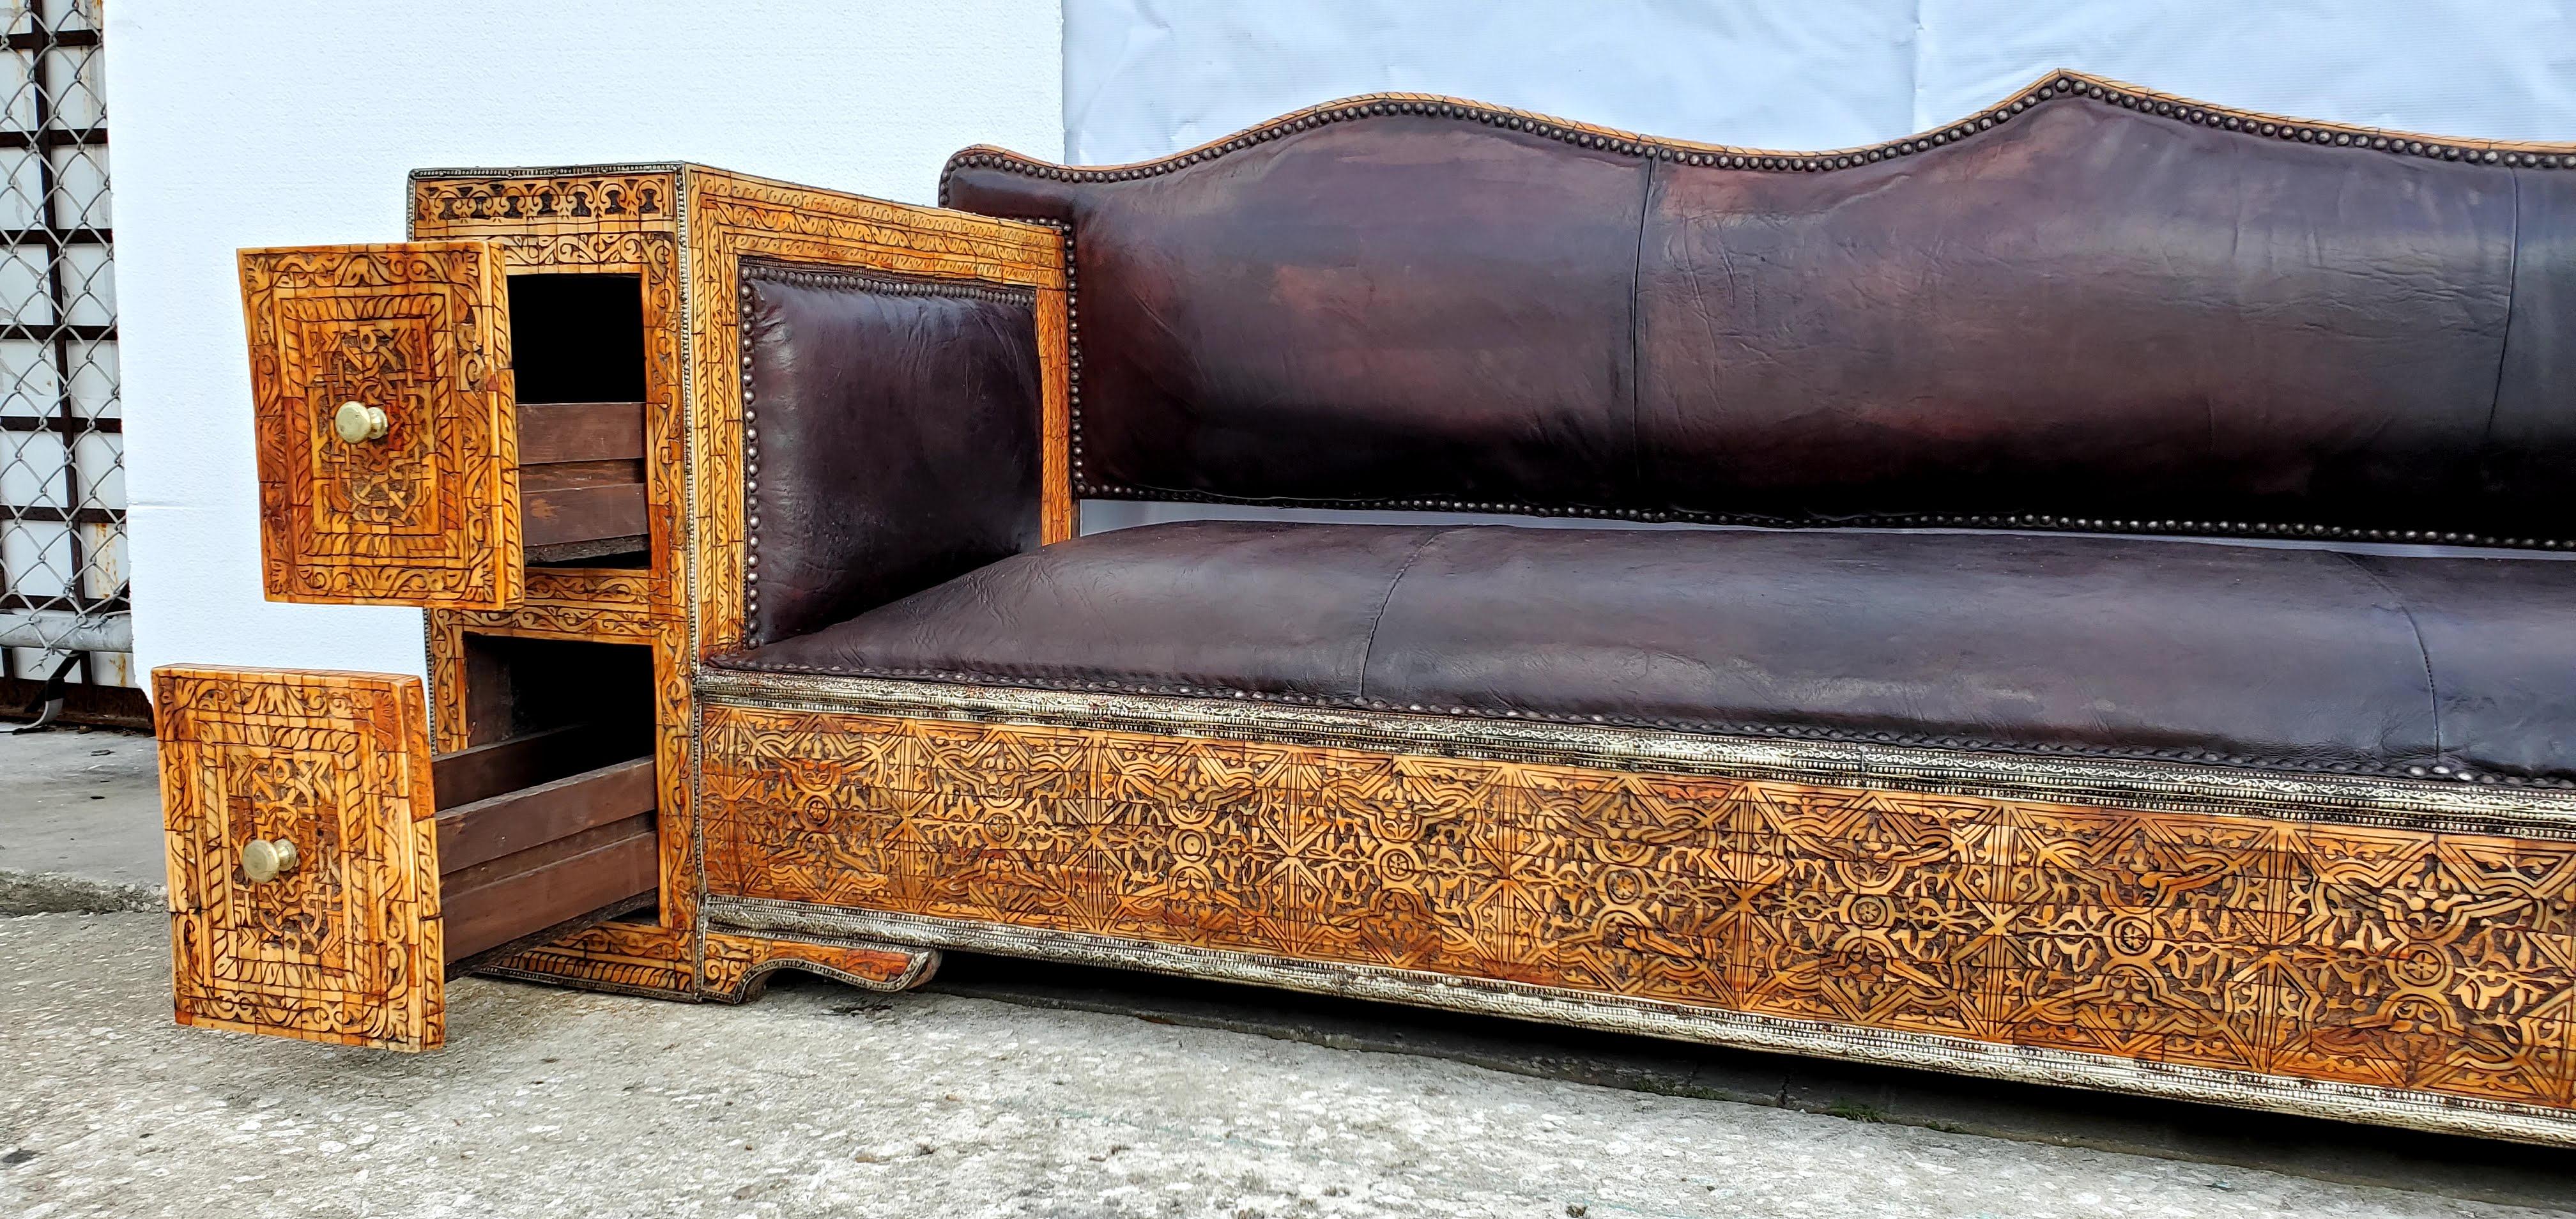 20th Century Rare and Unique Moroccan Leather Sofa or Bench